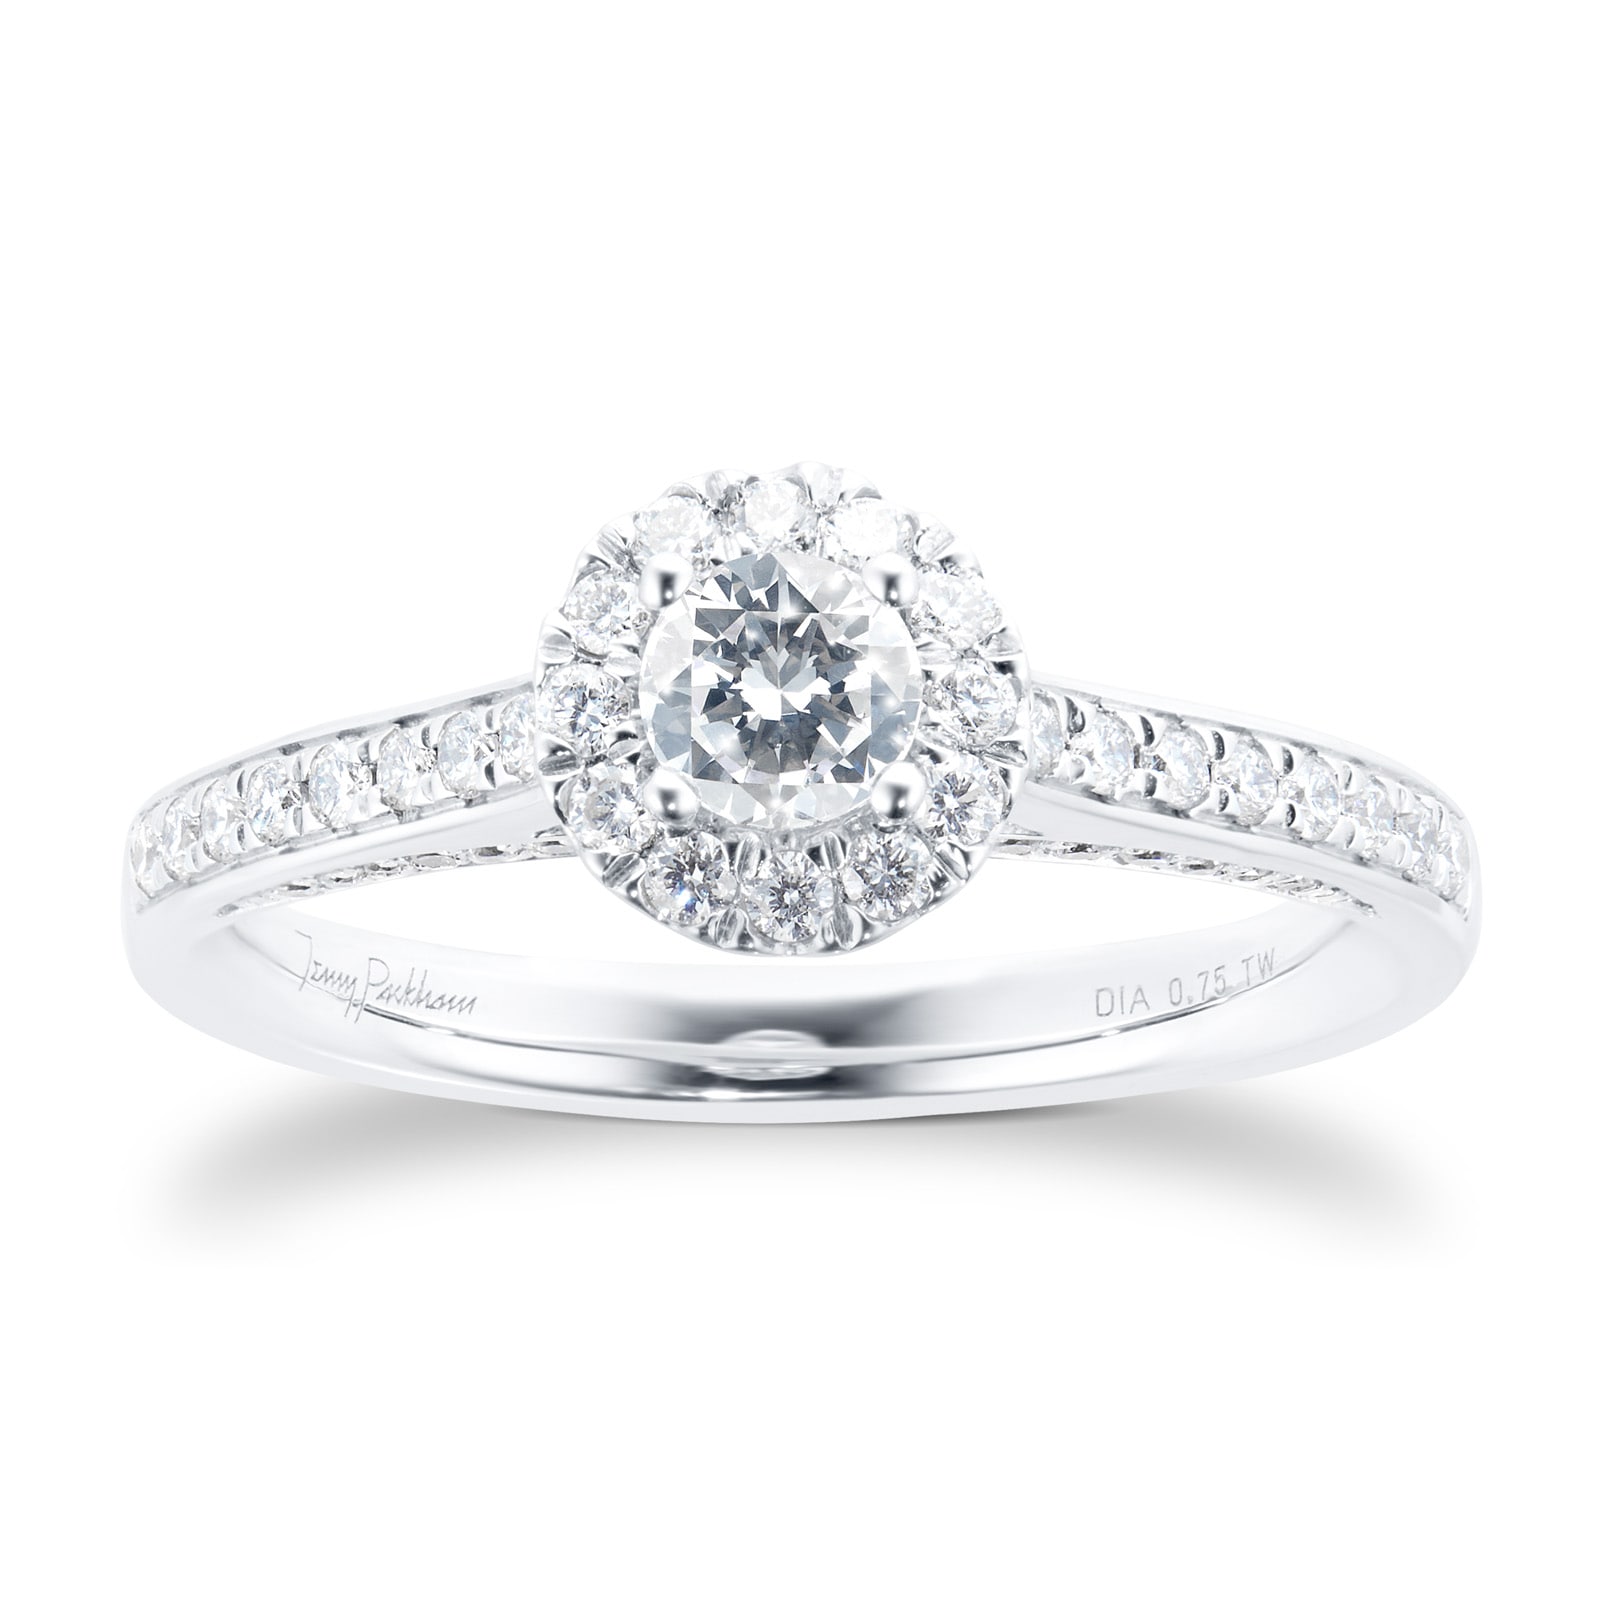 Platinum 0.75cttw Brilliant Cut Halo Diamond Ring - Ring Size O